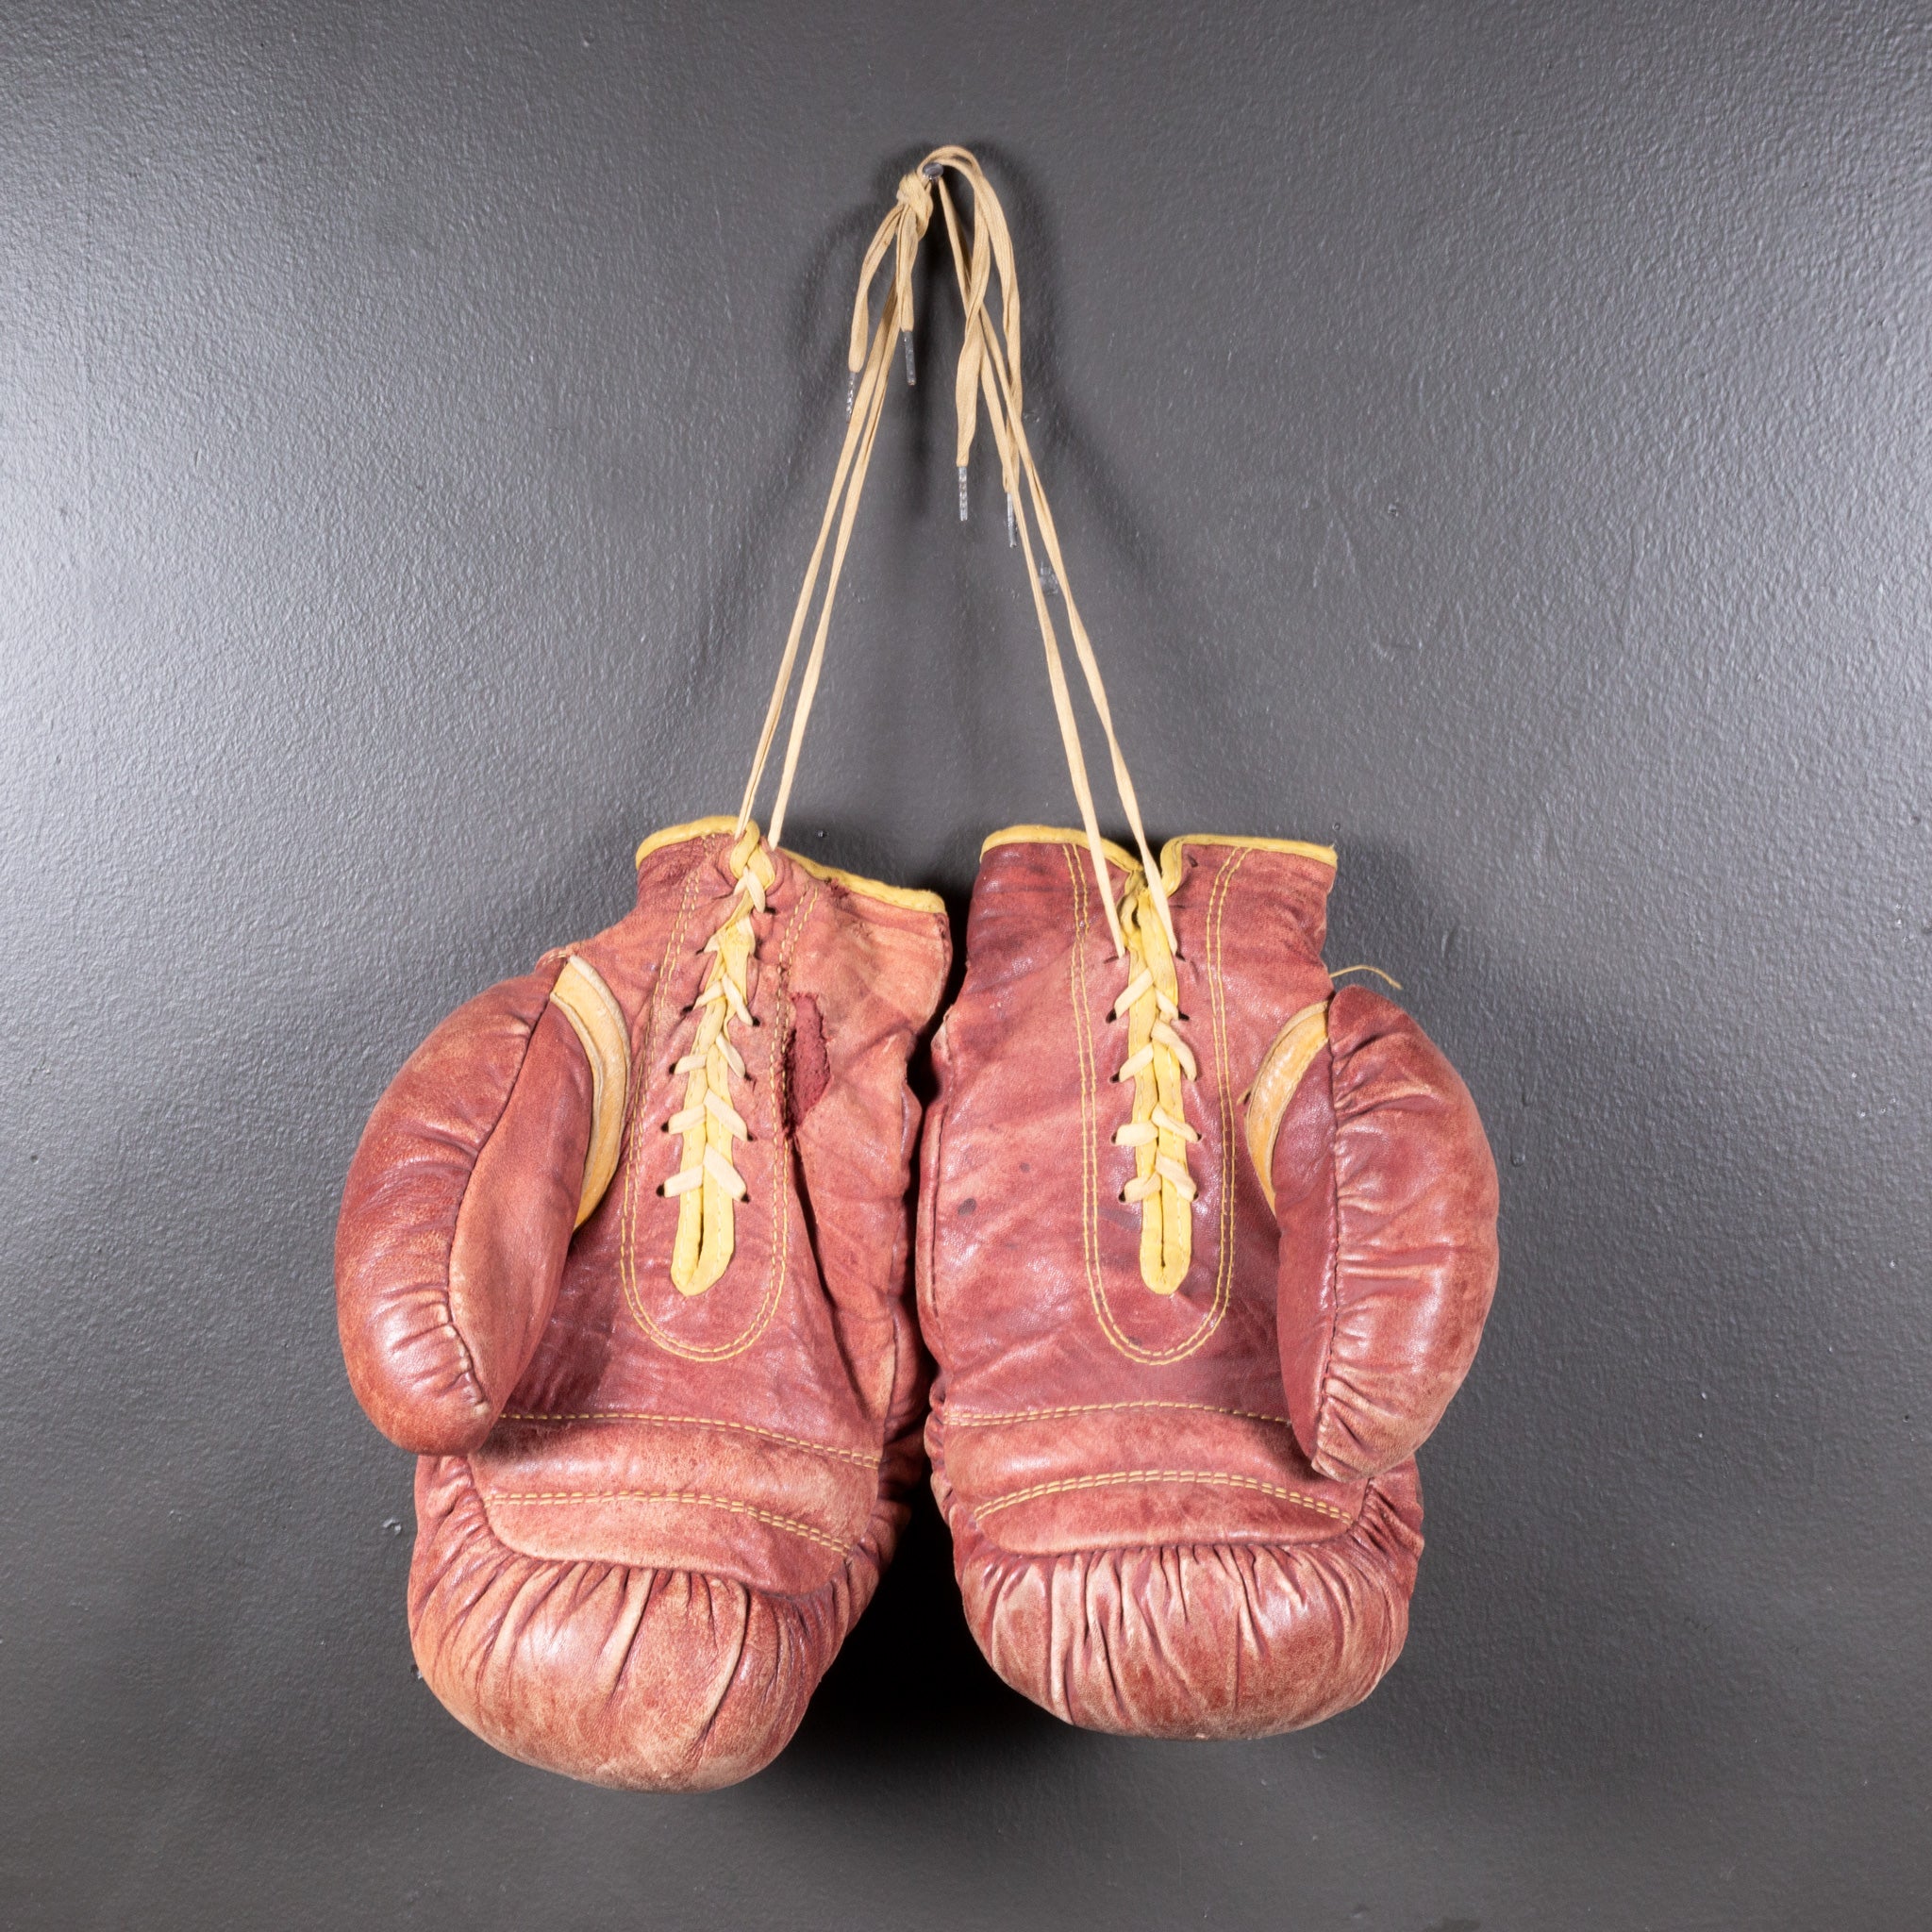 Vintage Marathon Leather Boxing Gloves c.1950-1960 | S16 Home